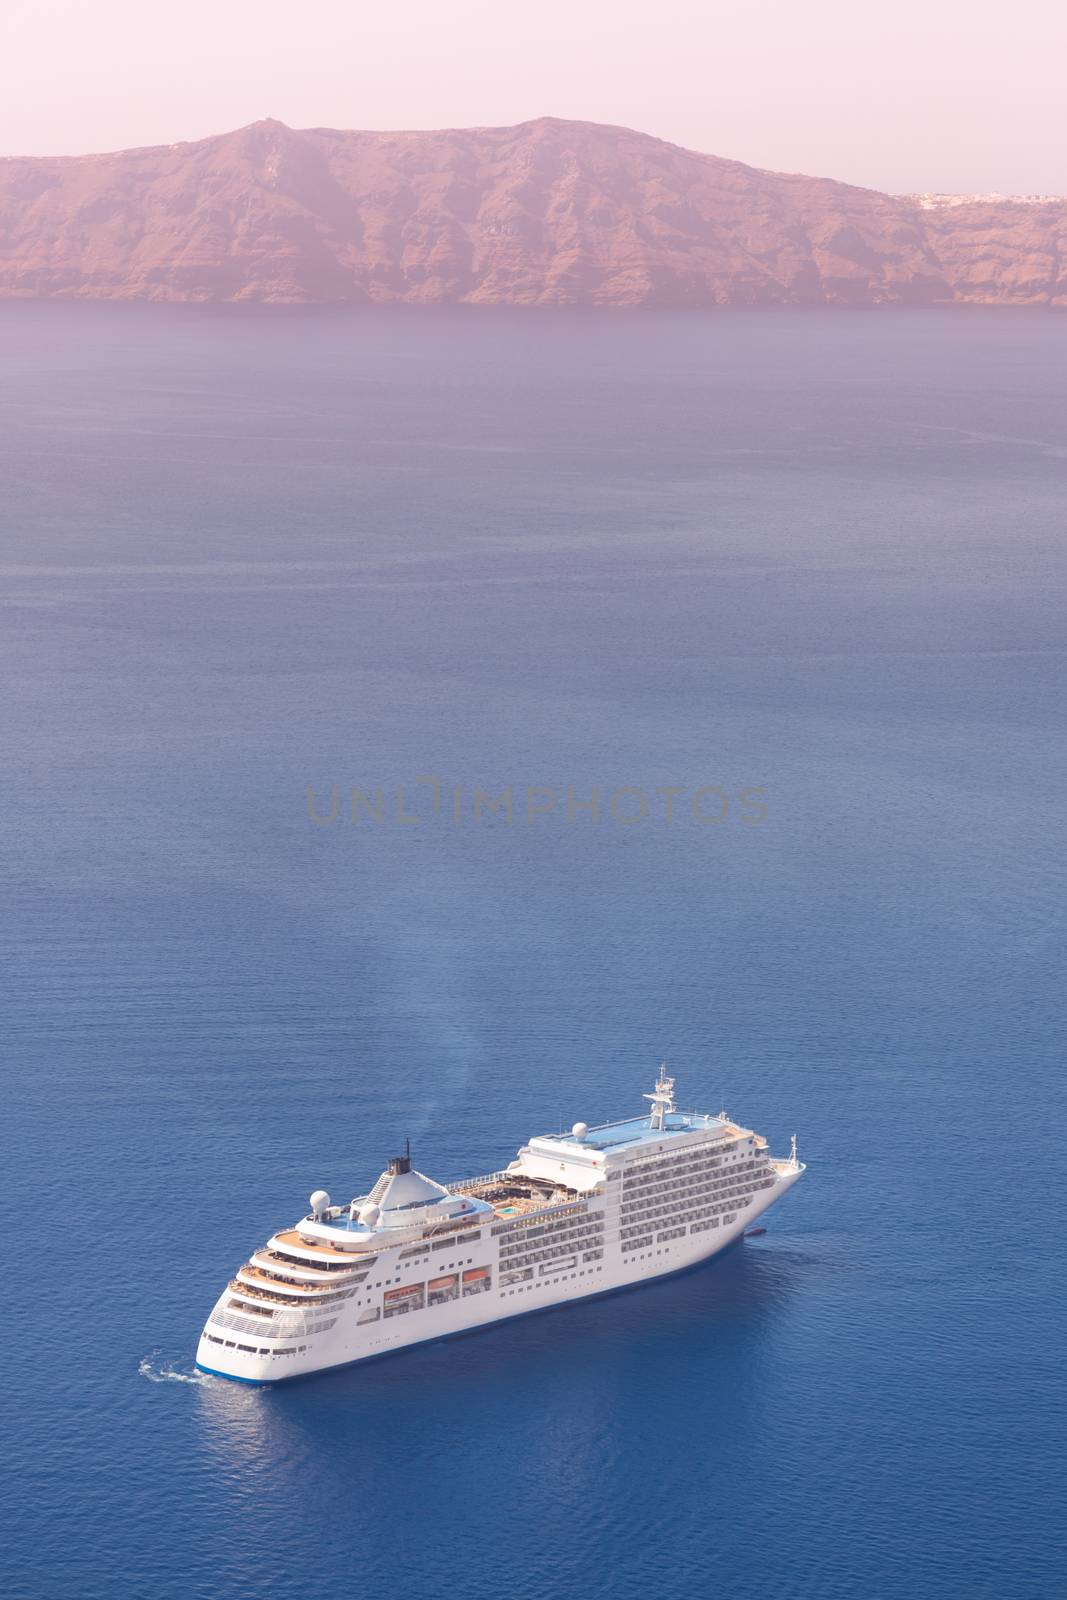 Luxury cruise ship sailing around Santorini island, Aegean sea in Greece.